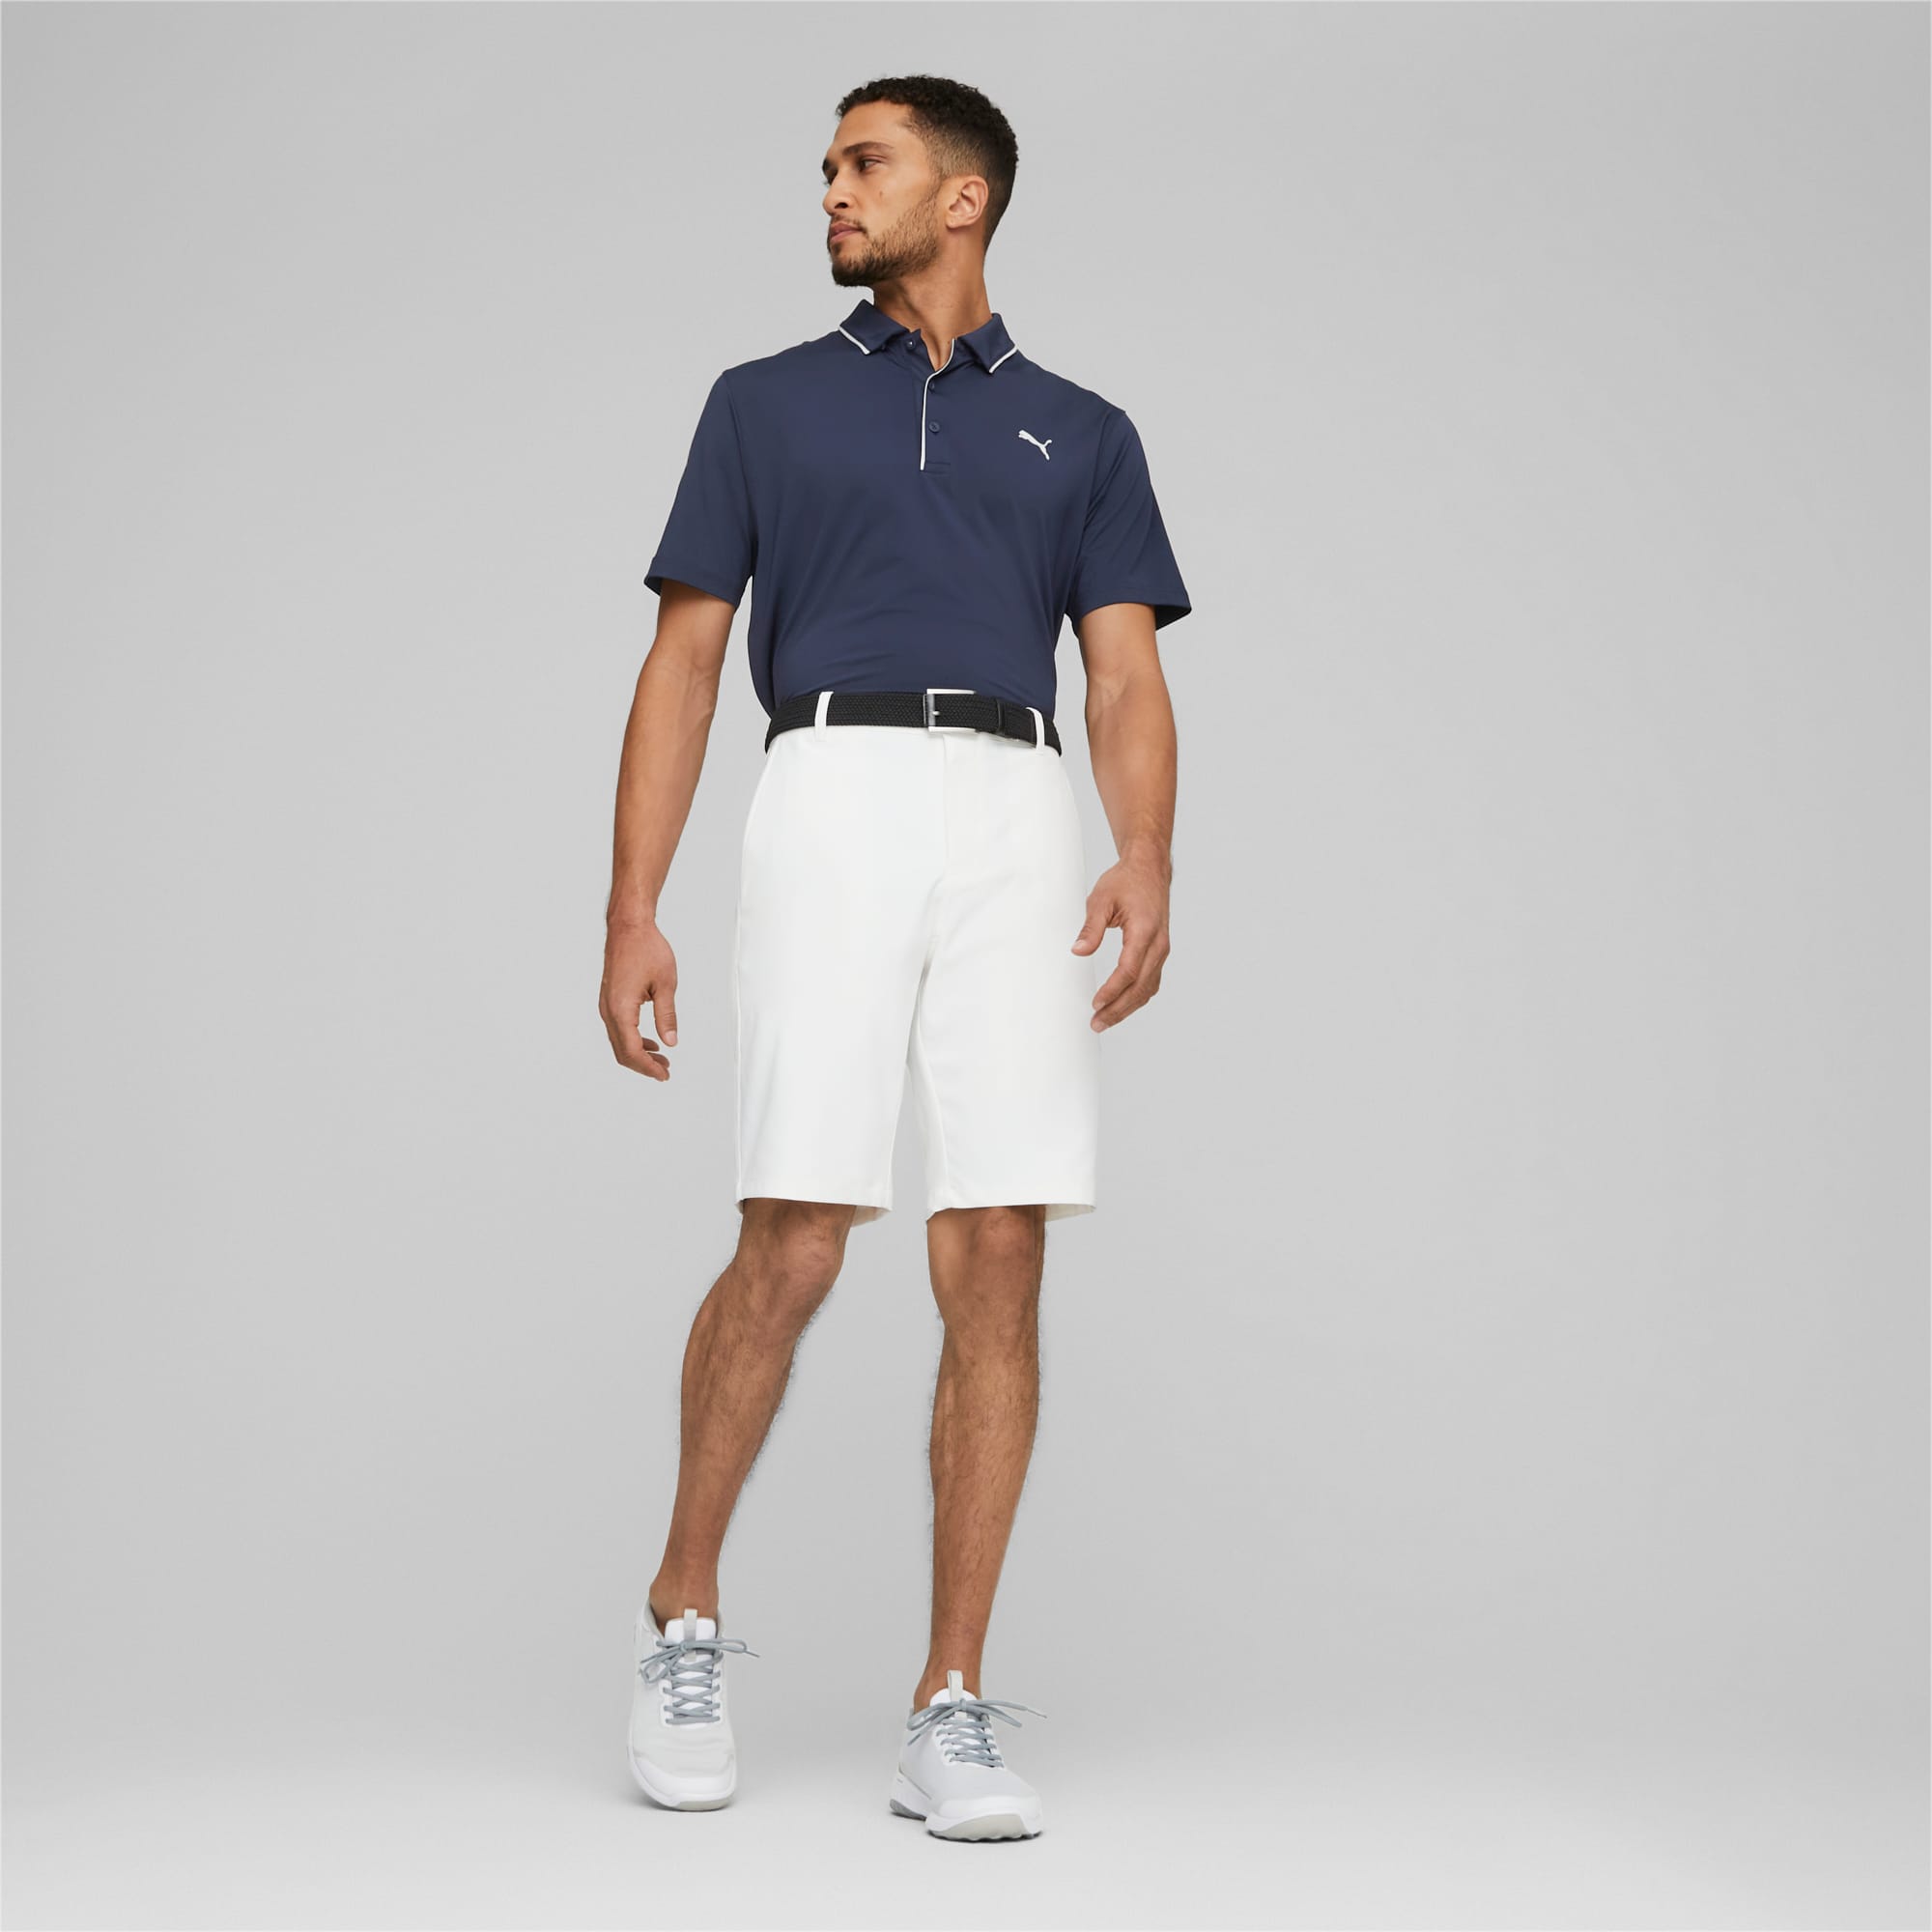 PUMA Mattr Bridges Golf Polo Shirt Men, Dark Blue, Size S, Clothing